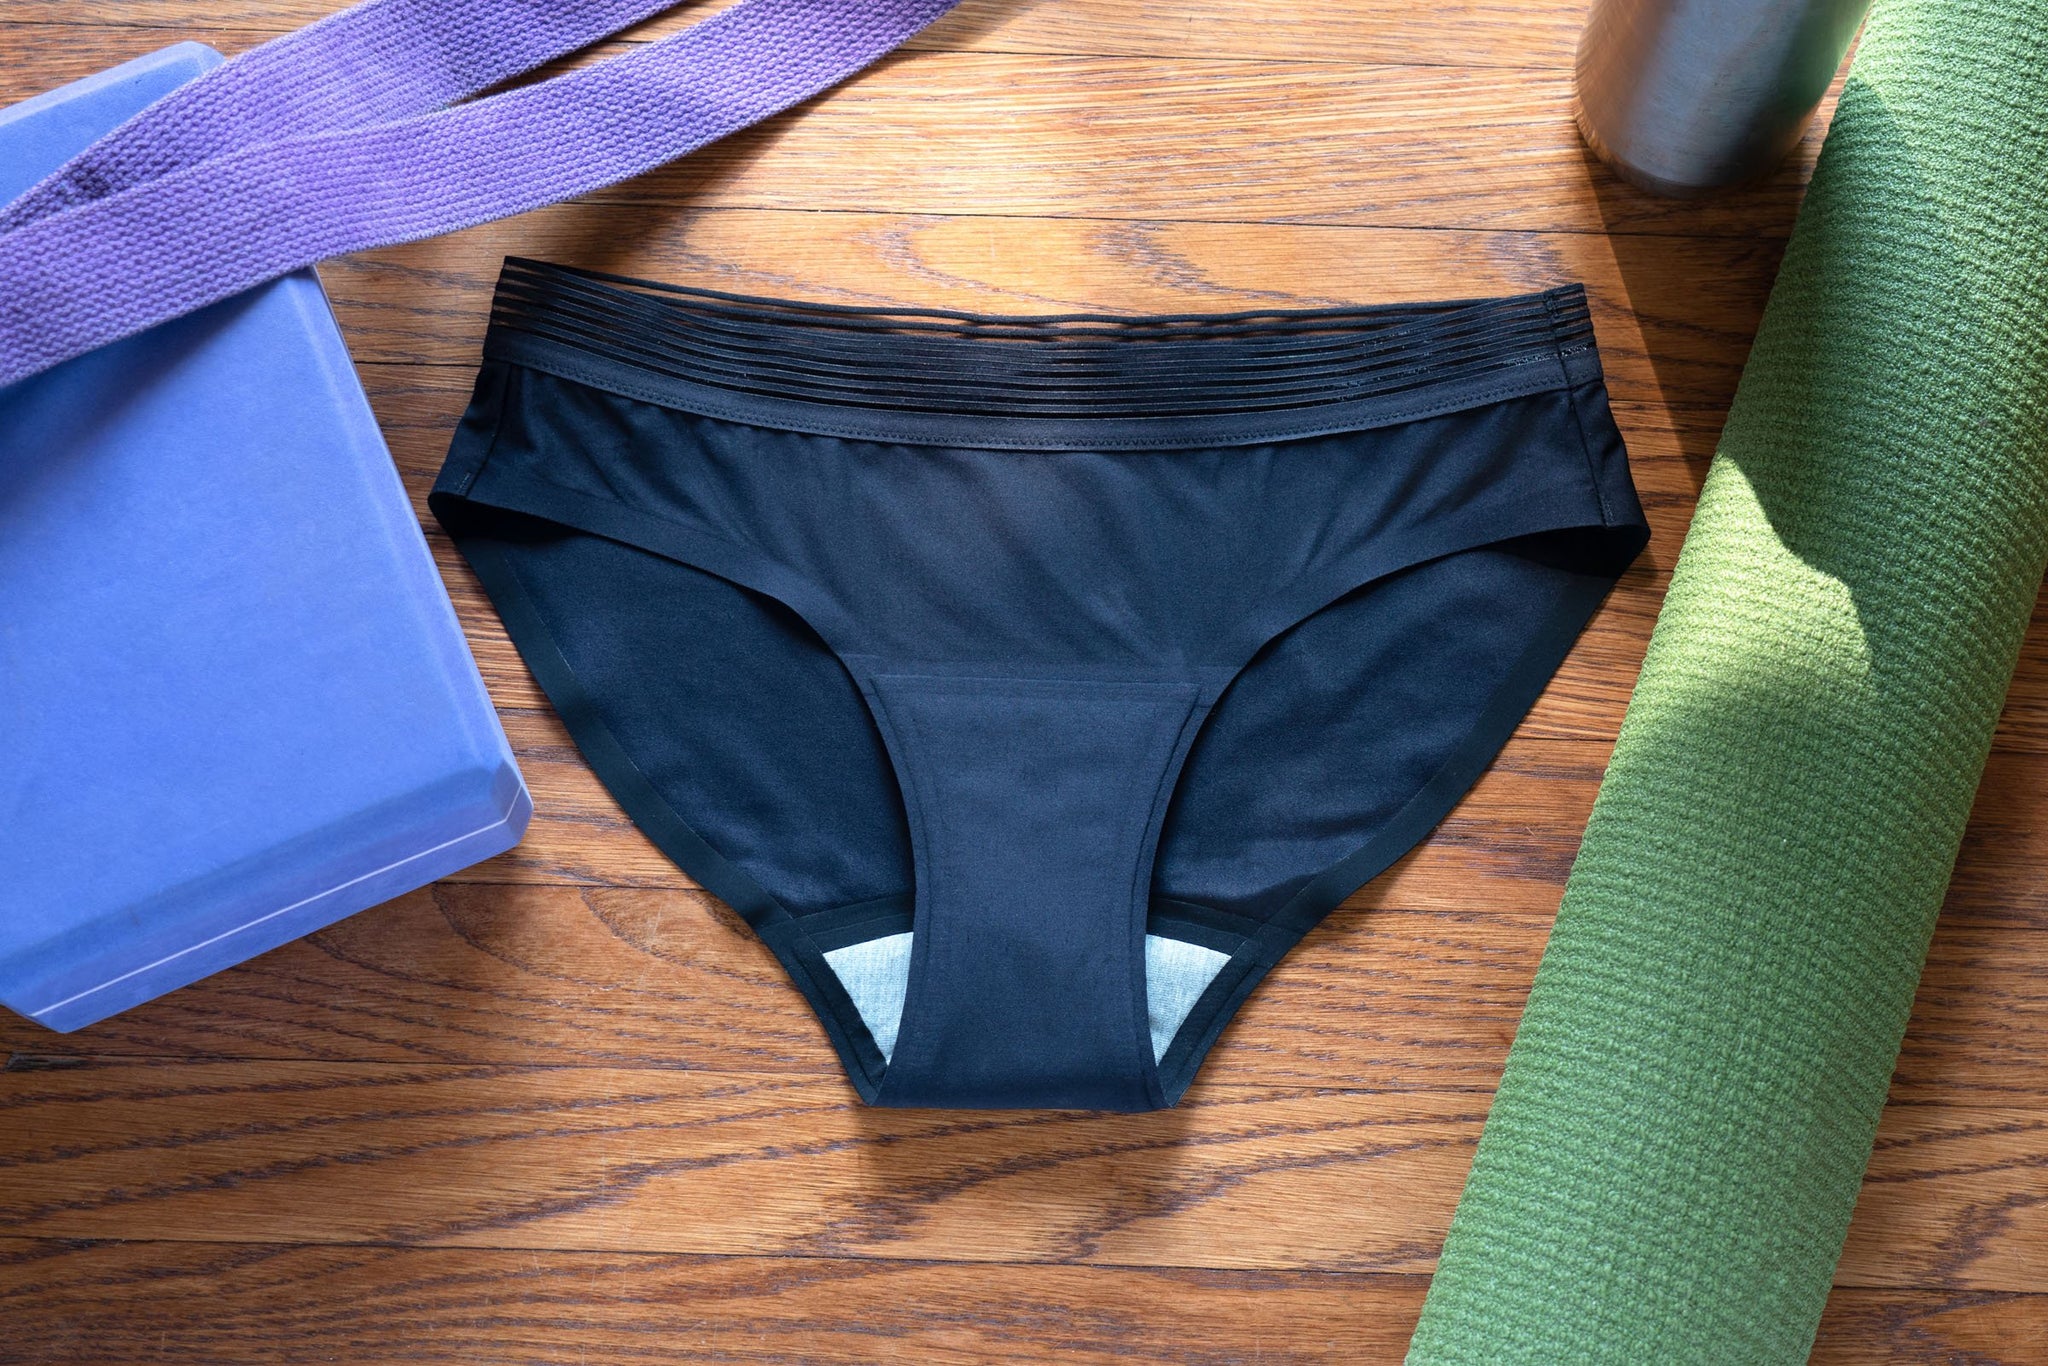 5 Best Leakproof Panties: Reviewed by a Urologist